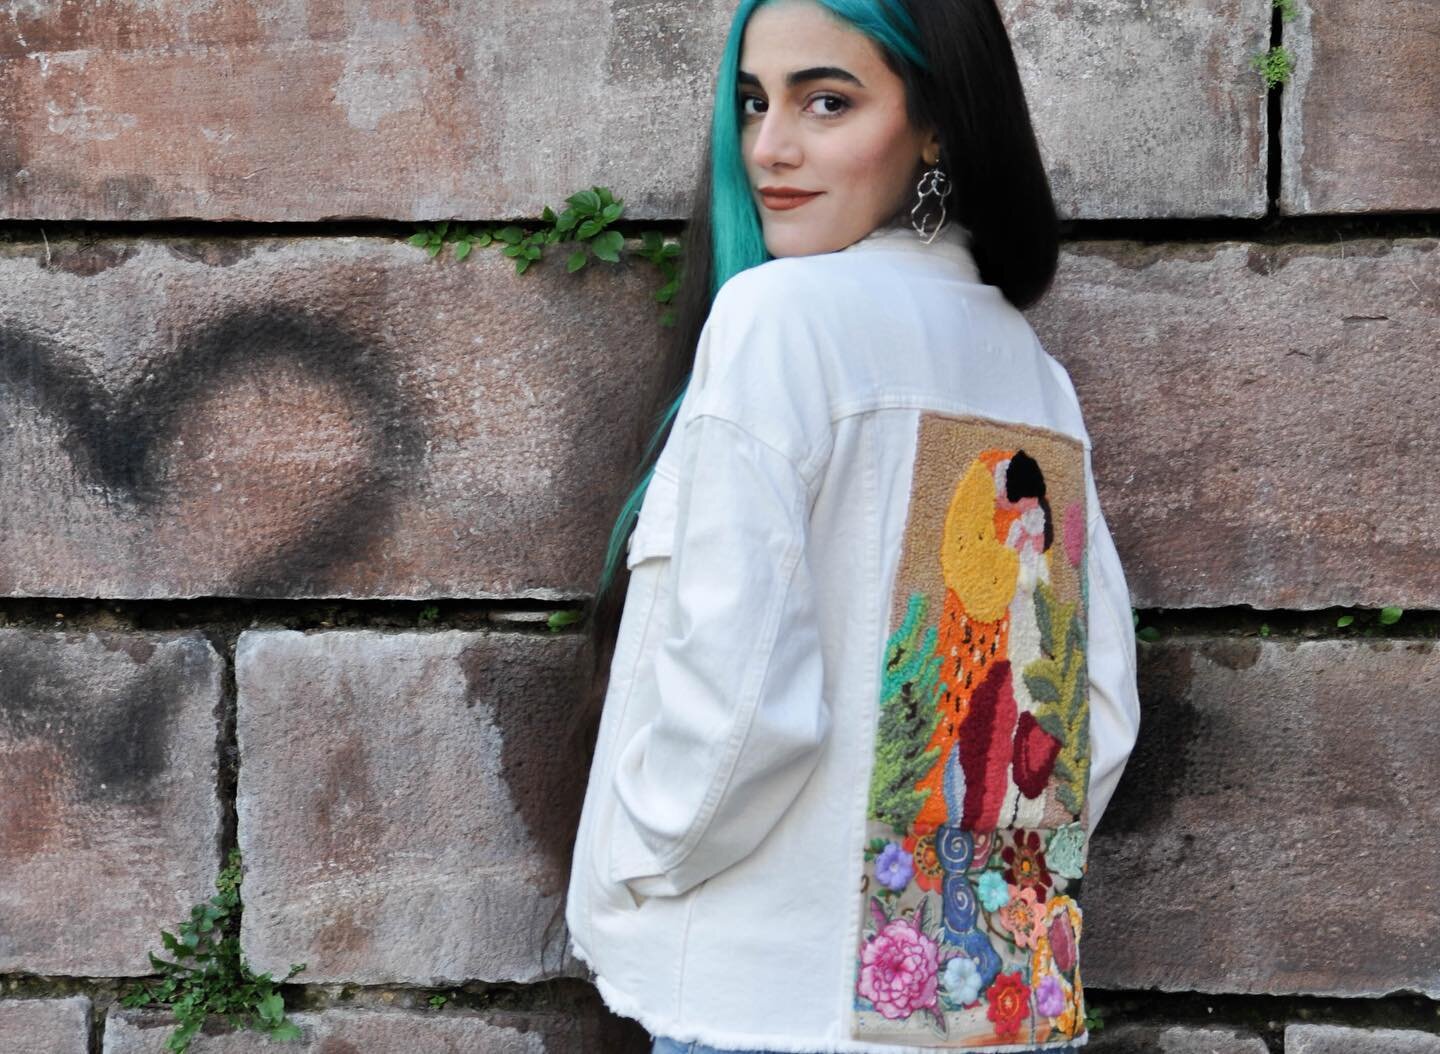 Patterns, ornaments, harmony, emotions, in one title: #thekiss, possibly Gustave Klimt most famous work.
-

Collaboration artist: 
Embroidery: @anireth_art 
Model: @hayasart 
Photos: @sorrisofilms &amp; @meryangelodavid 
-
.#artnouveau #jugendstil 
#